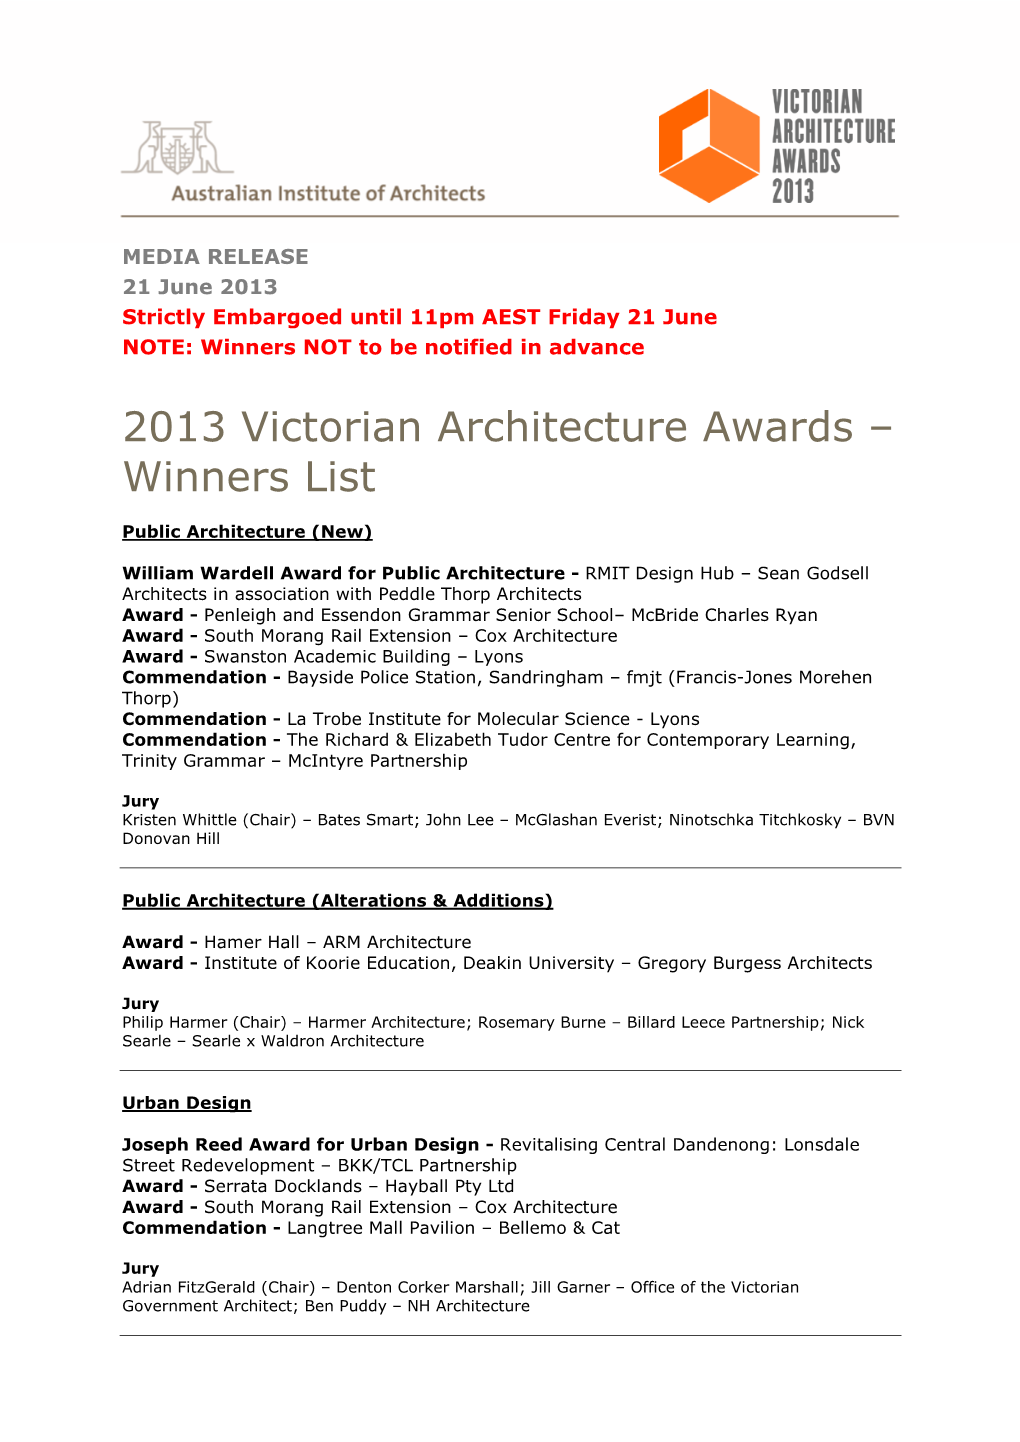 2013 Victorian Architecture Awards – Winners List